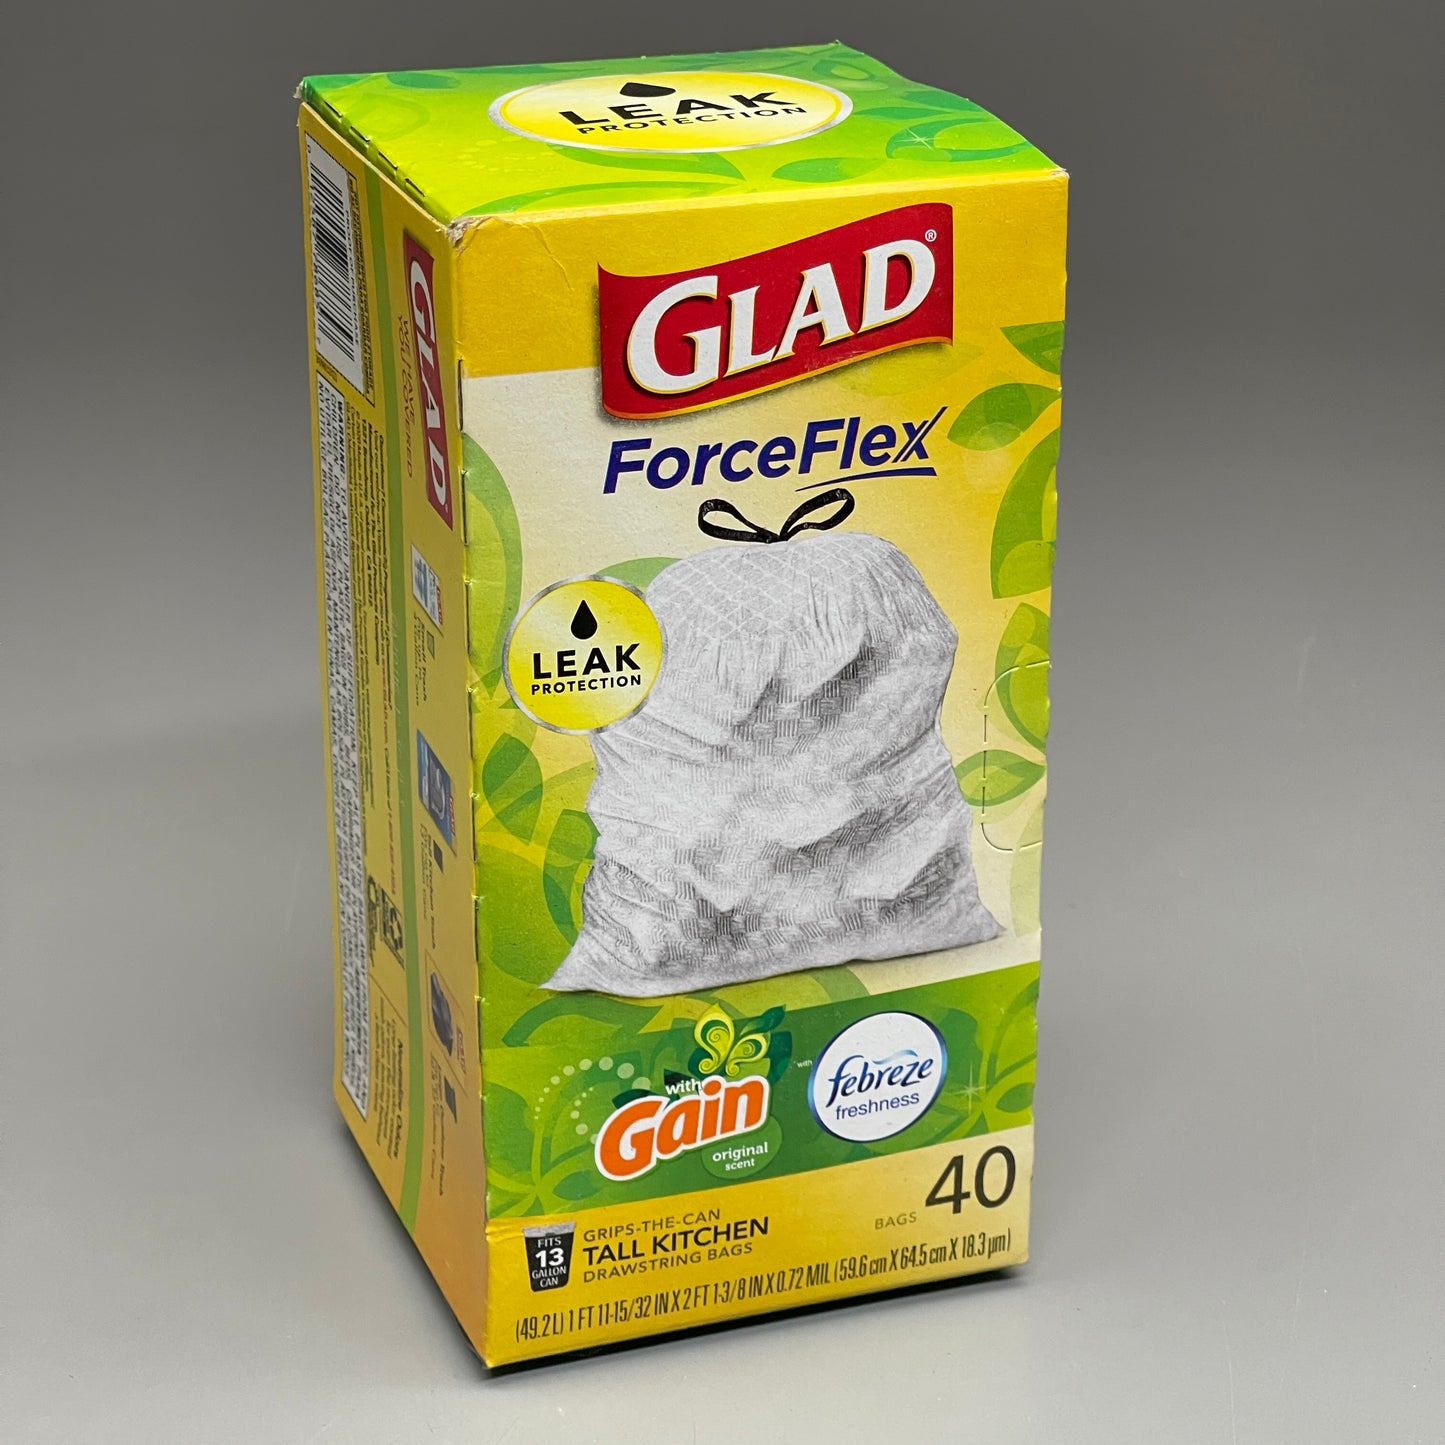 GLAD (3 PACK) Force Flex Gain Original Scent Tall Kitchen Drawstring 30GAL, 40 Bags